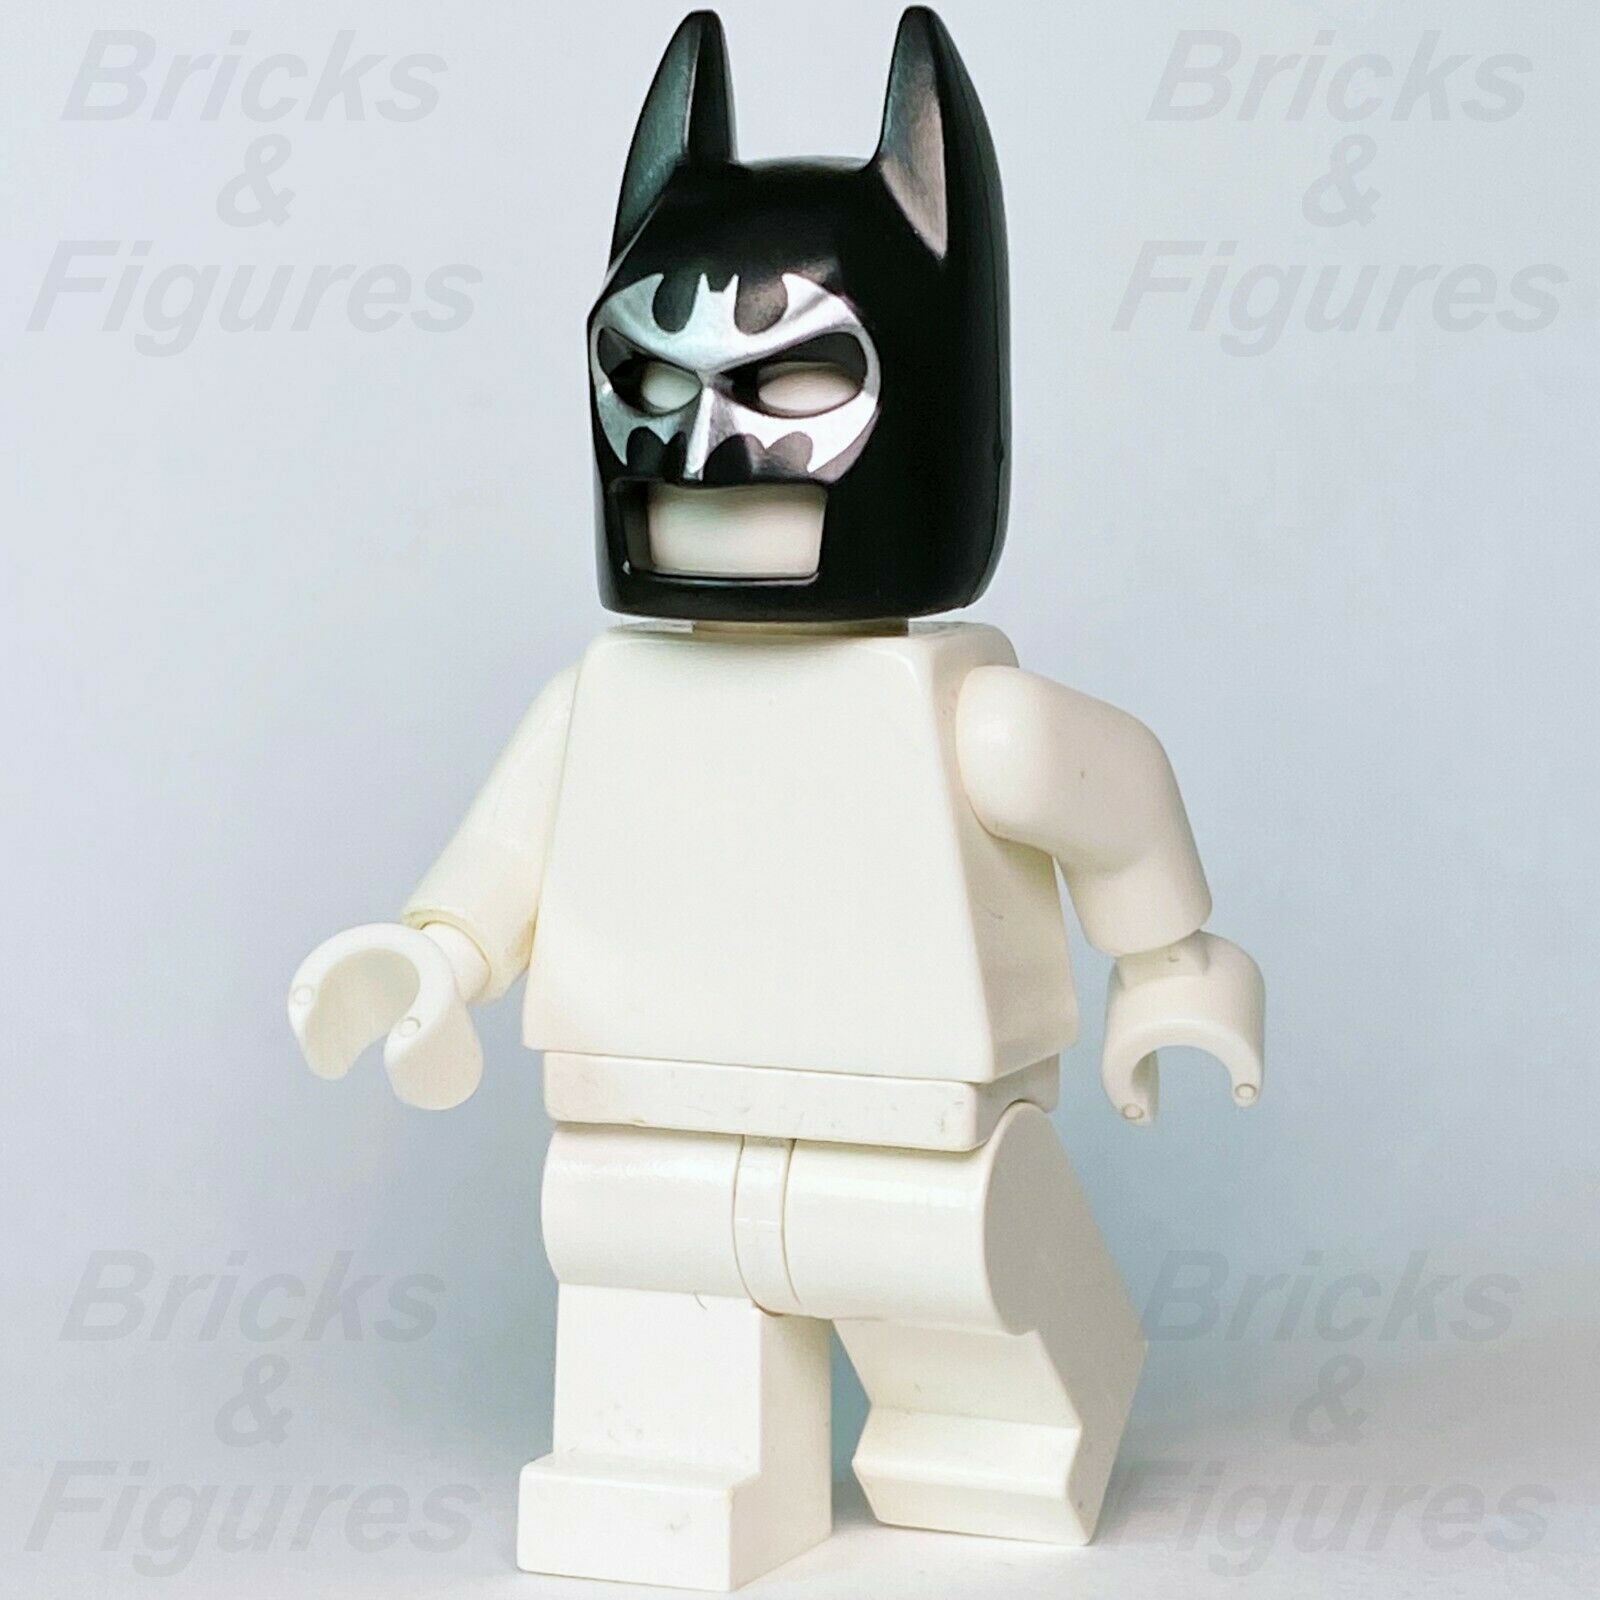 DC Super Heroes LEGO Glam Metal Batman Helmet Mask The Movie Part 71017 - Bricks & Figures